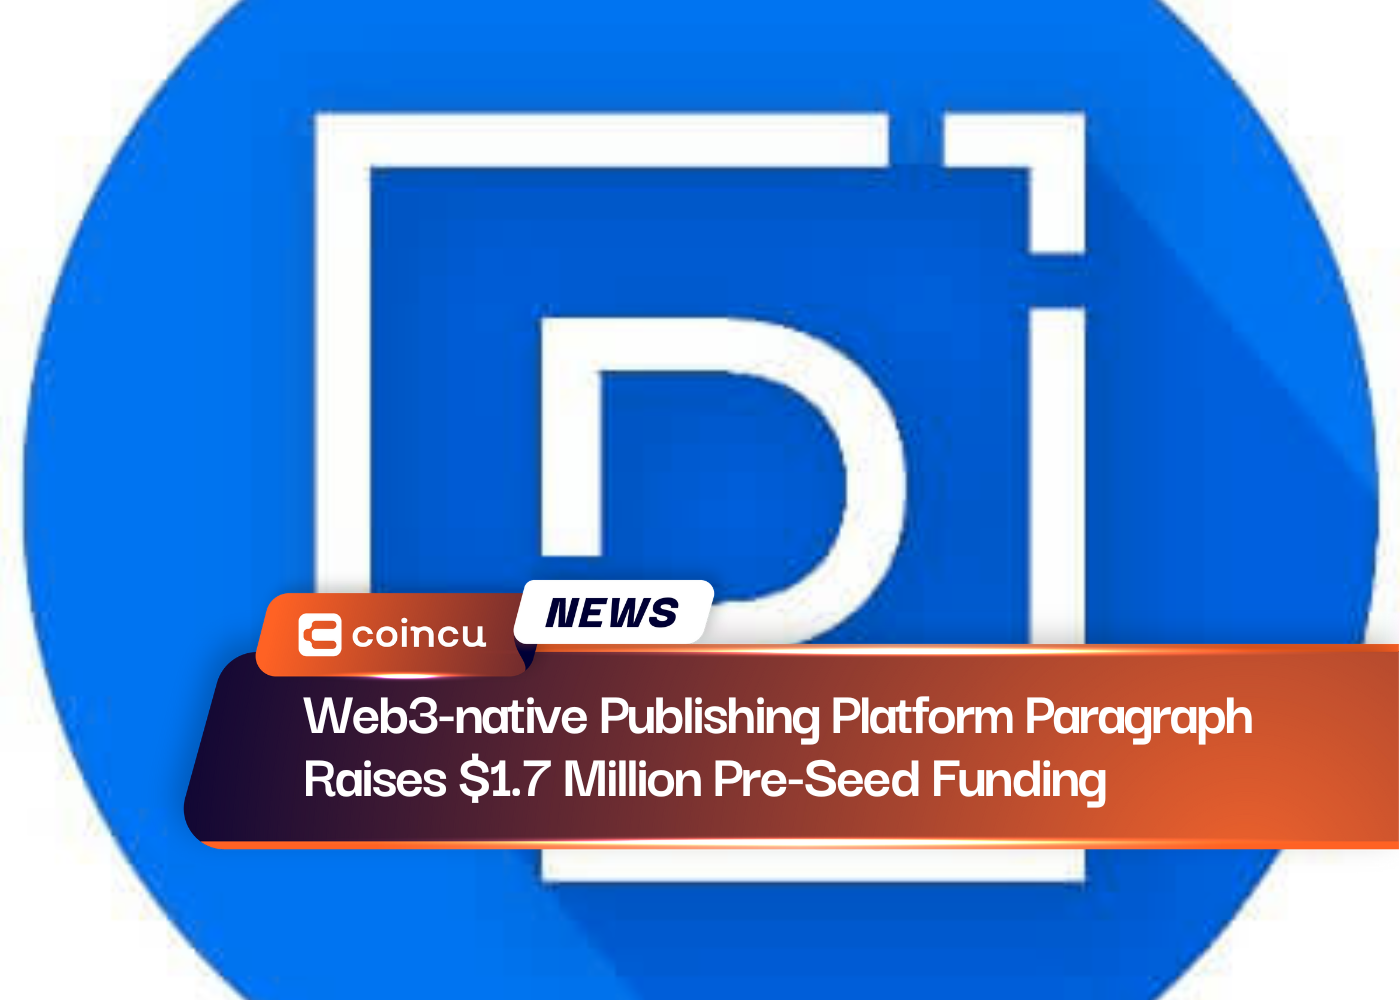 Web3-native Publishing Platform Paragraph Raises $1.7 Million Pre-Seed Funding